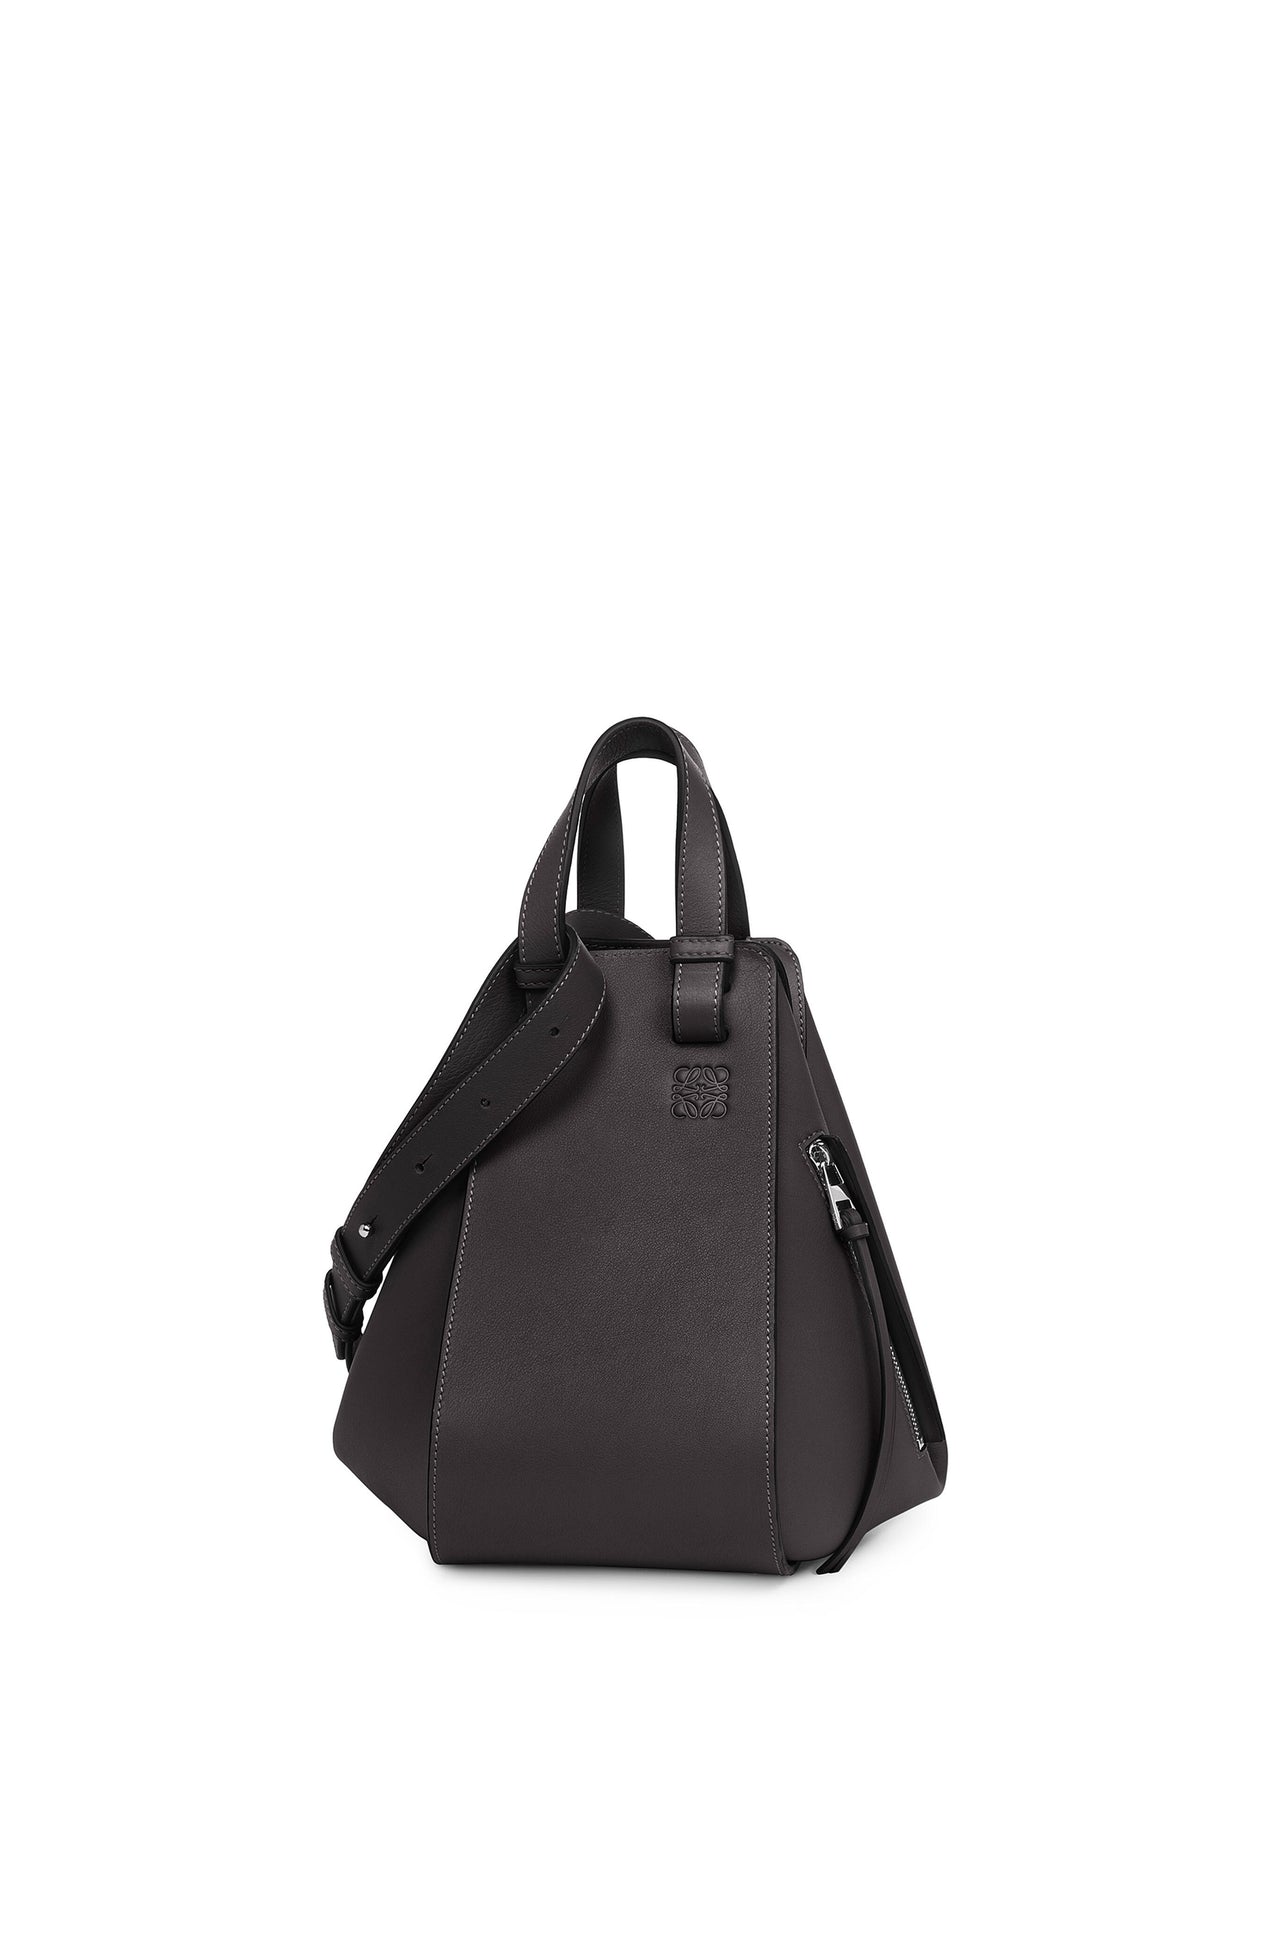 Loewe Small Hammock bag in classic calfskin (Colour:  Black)